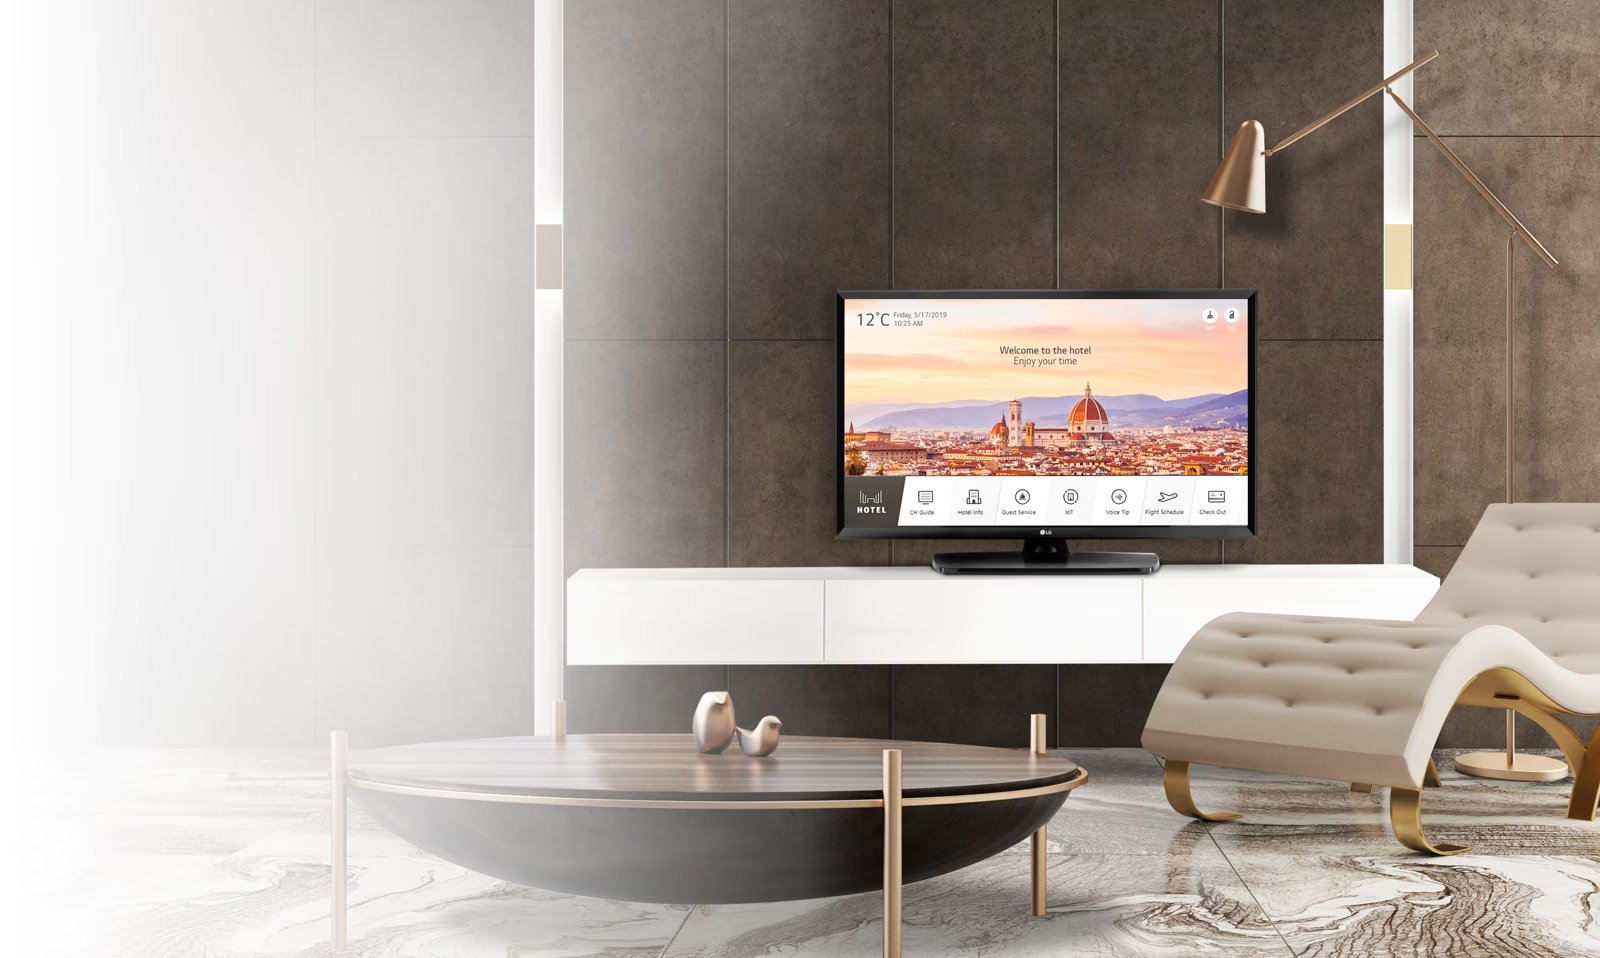 LG 32LT661H 32" Pro:Centric Smart Hotel TV